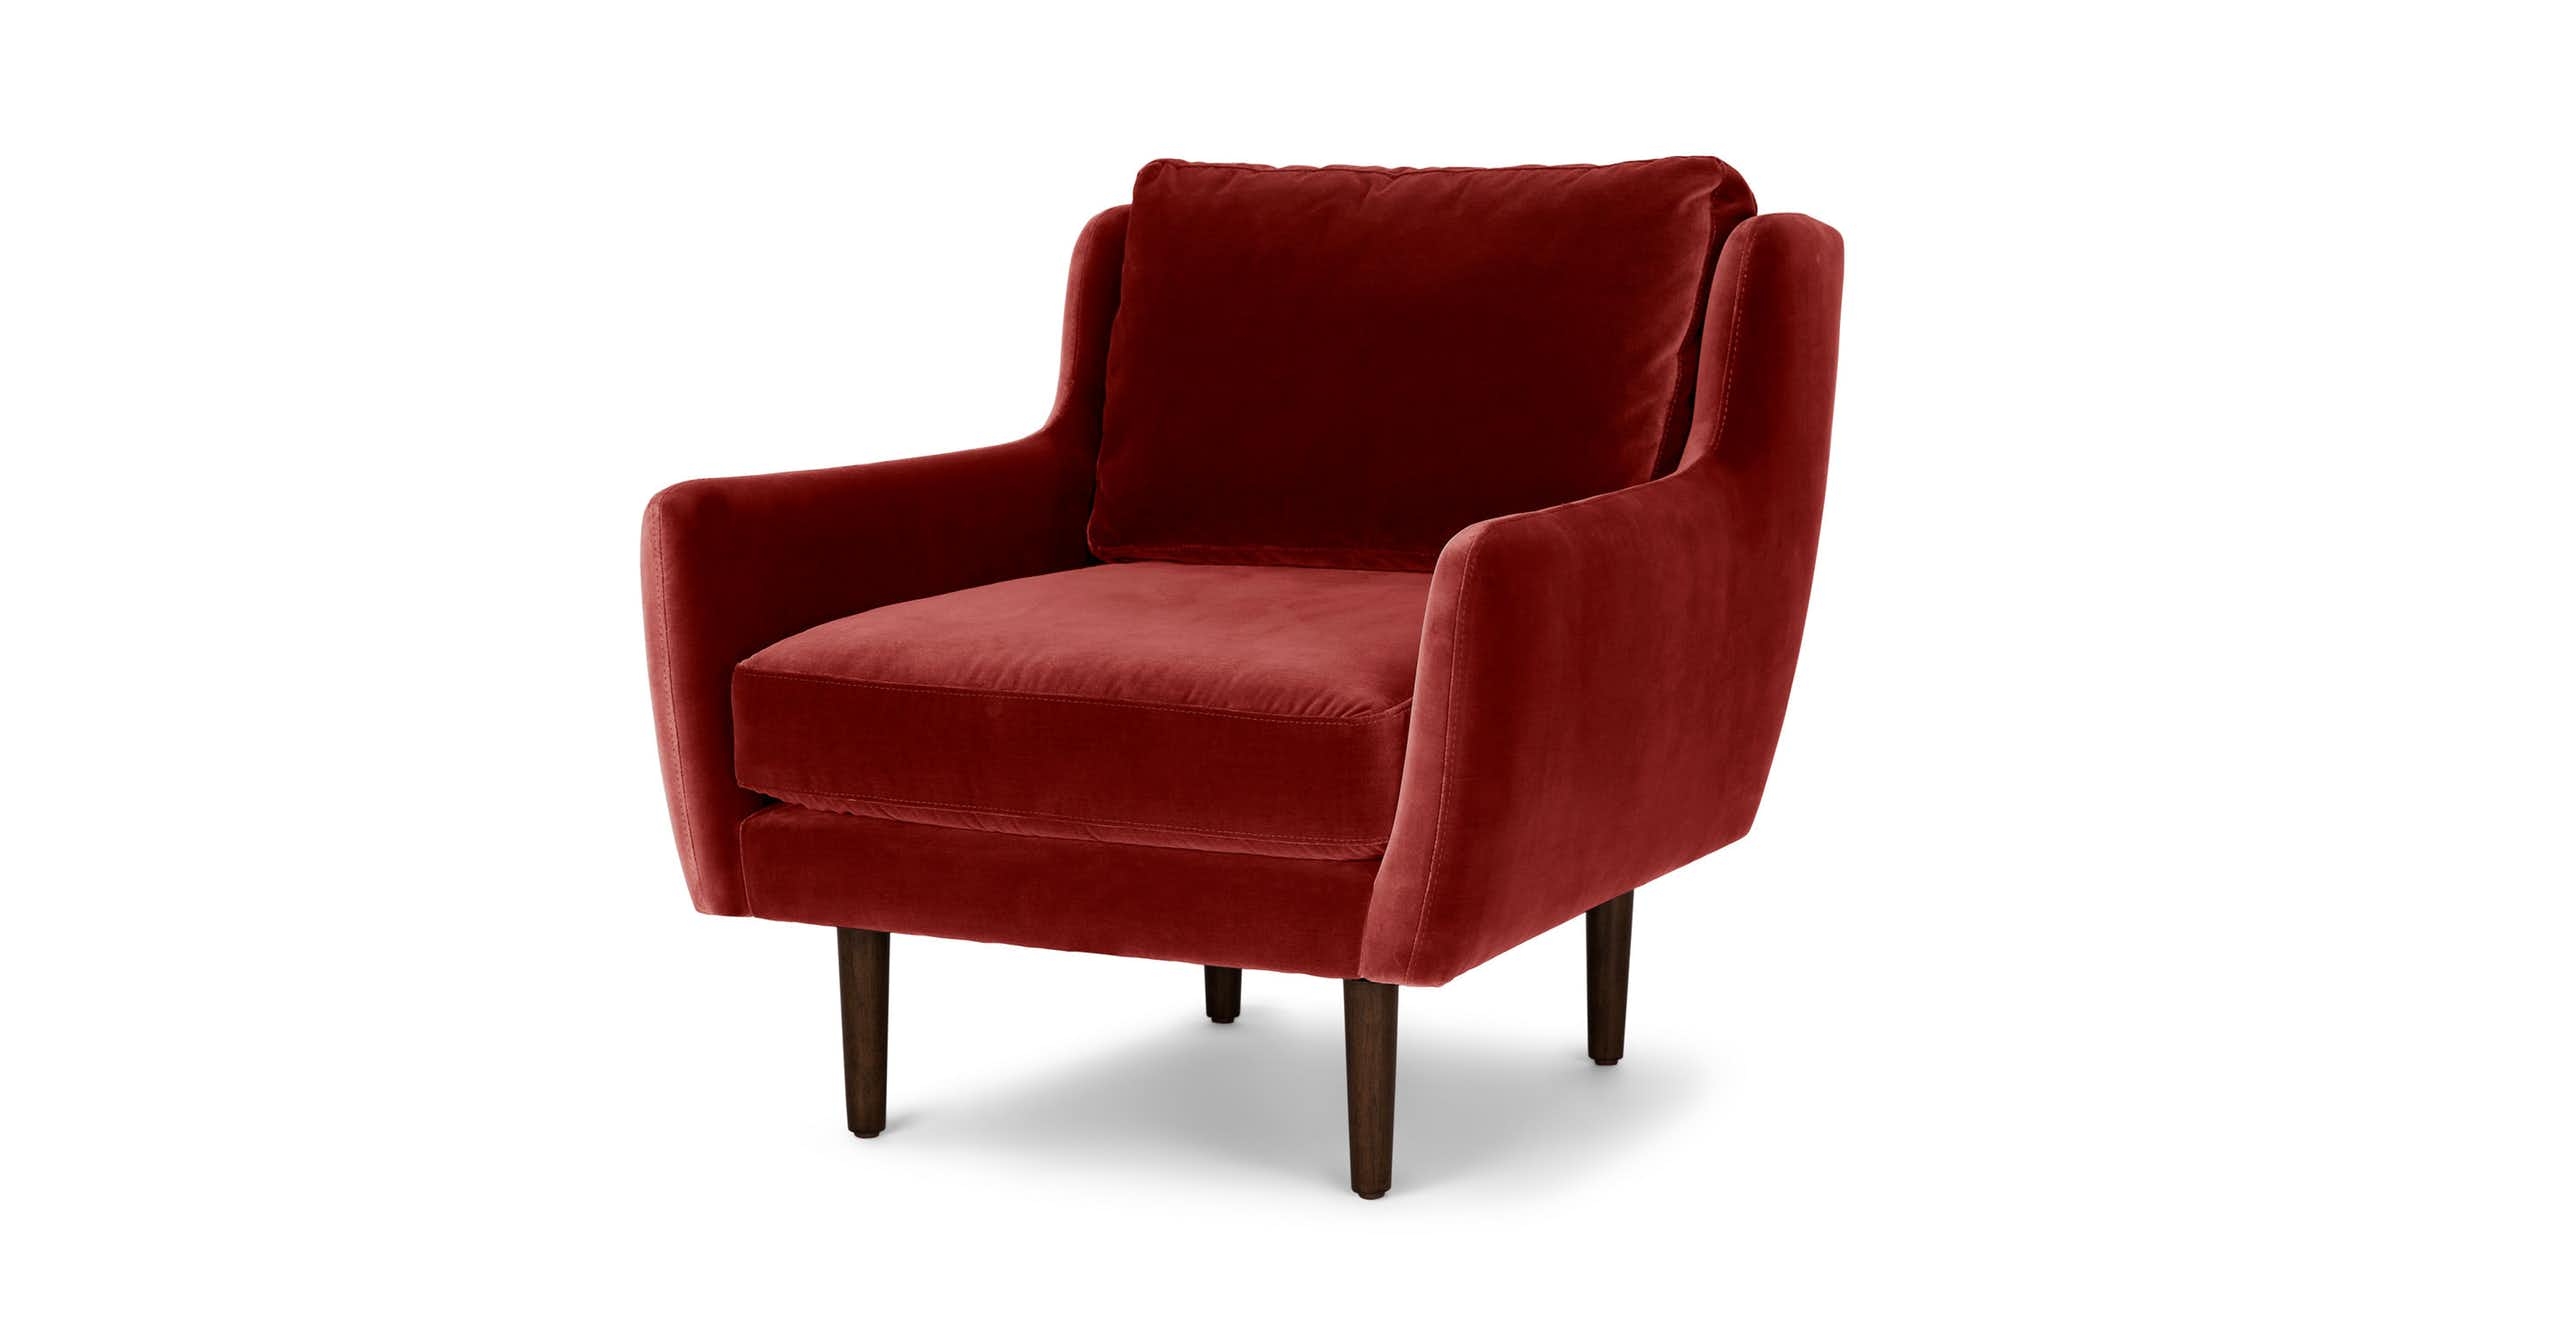 Matrix Claret Red Chair - Image 1